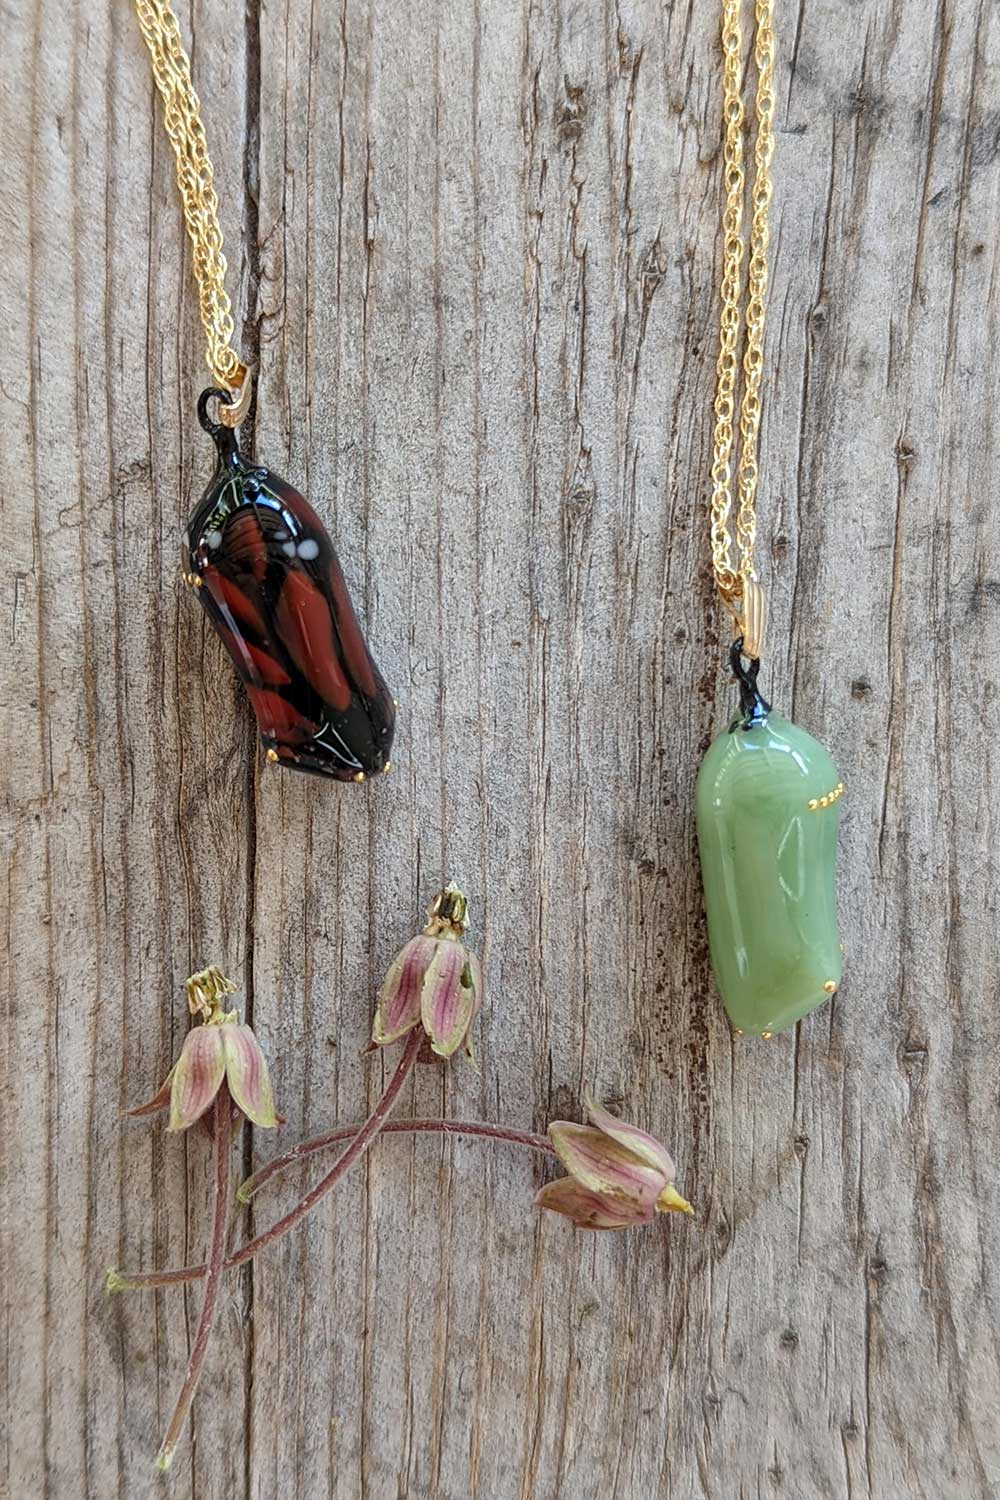 Monarch chrysalis jewelry. Monarch chrysalis pendants in glass and 24k gold on wood next to milkweed